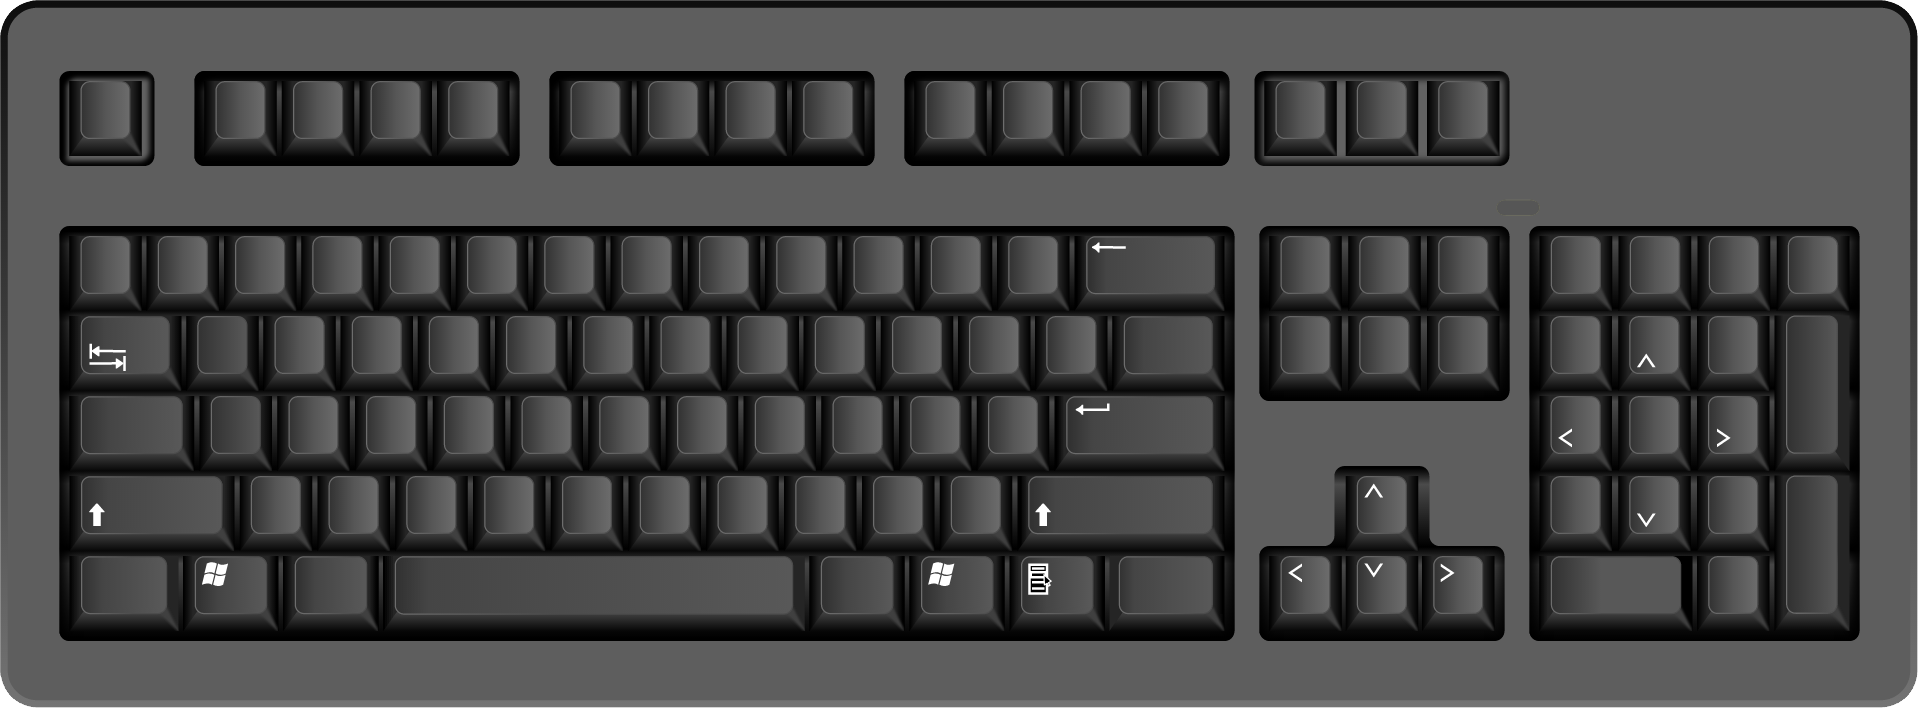 Black computer keyboard PNG image